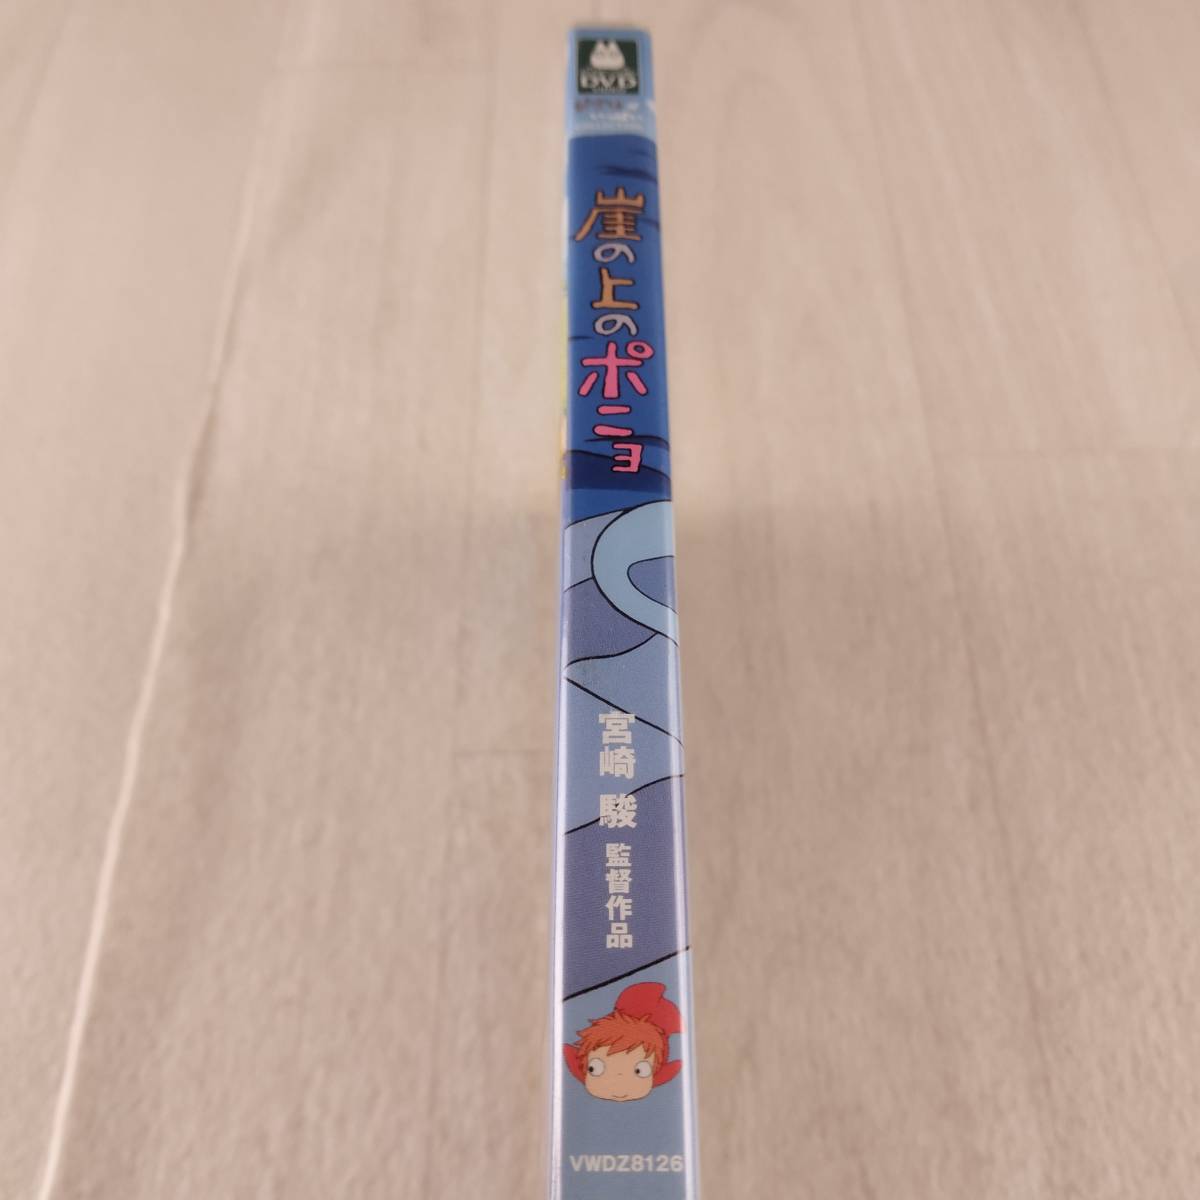 1D6 DVD 崖の上のポニョ 宮崎駿 スタジオジブリ_画像7